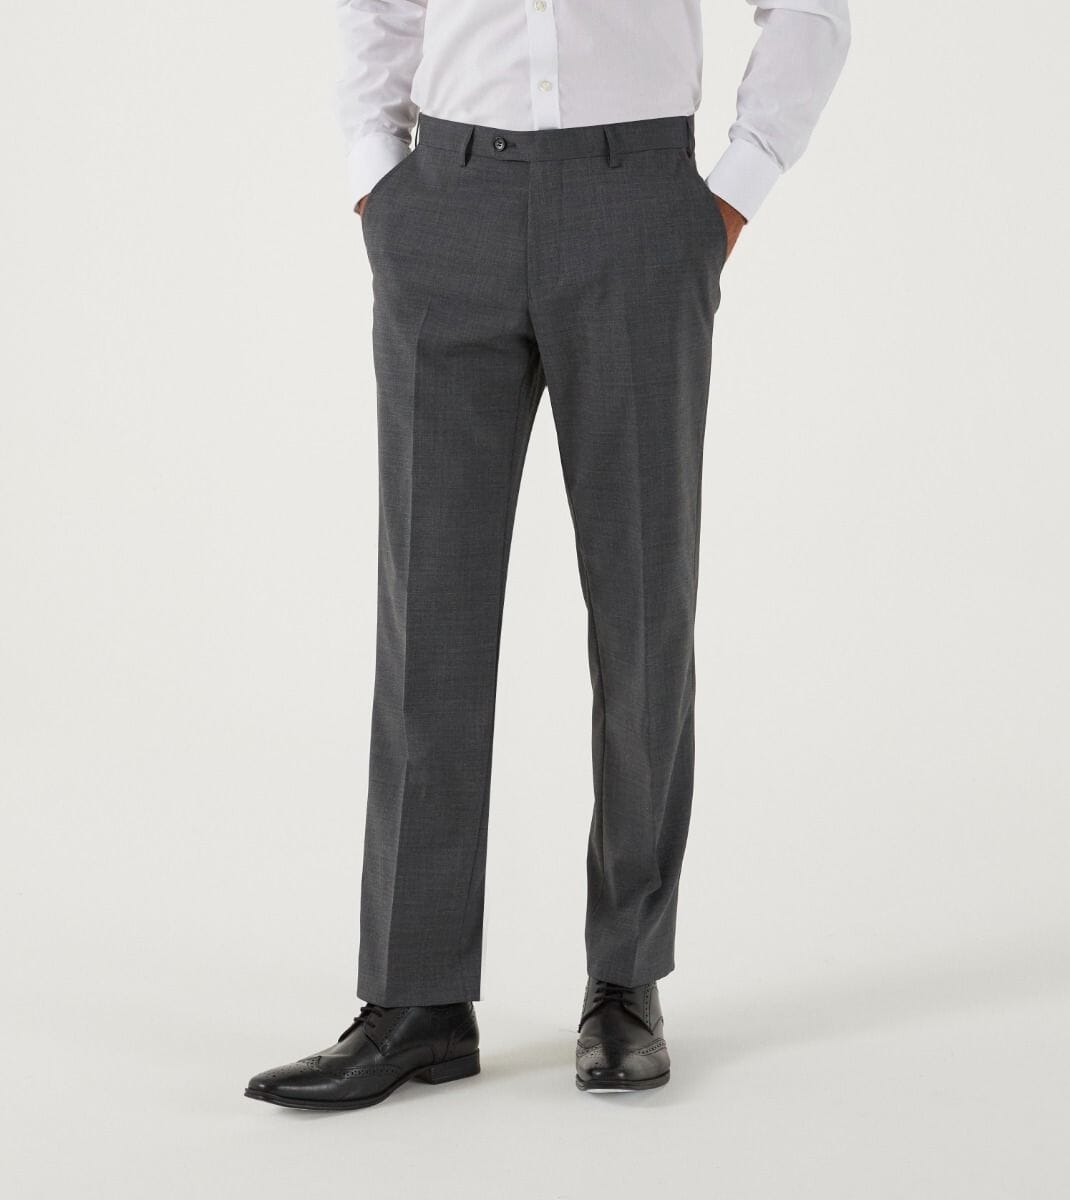 Darwin Grey Trousers - Trousers - 28R - THREADPEPPER